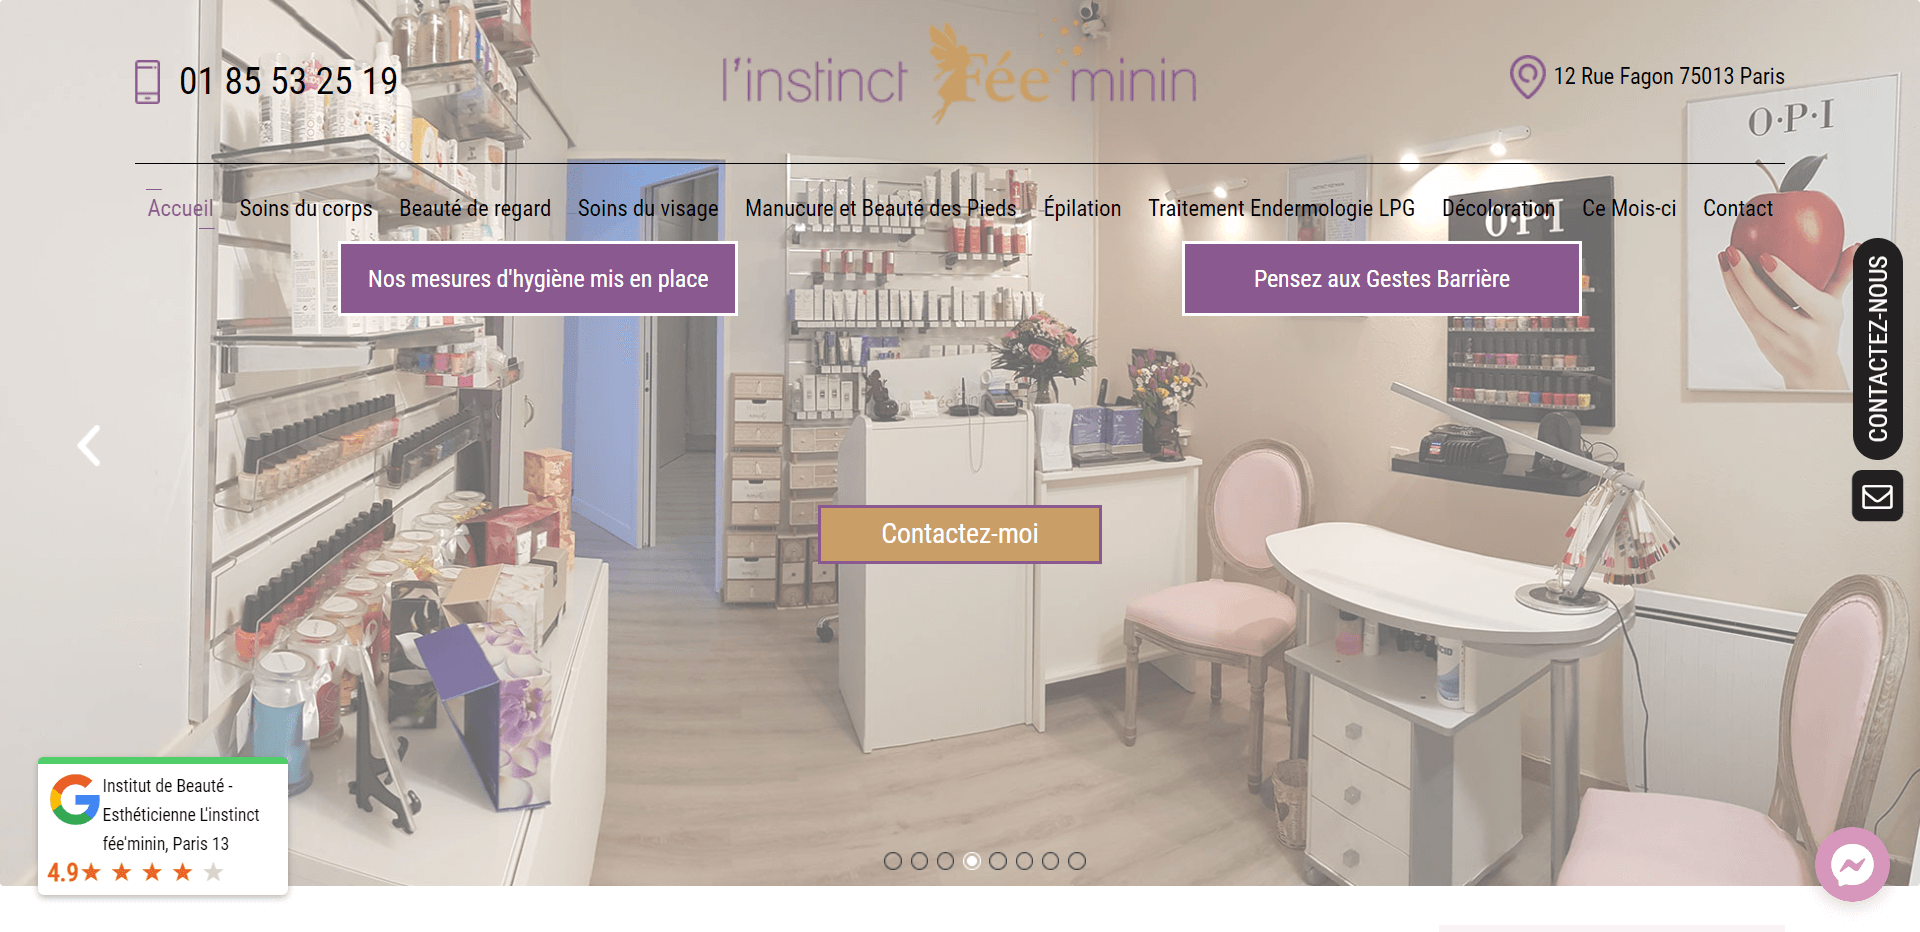 exemple site instinct fee minin